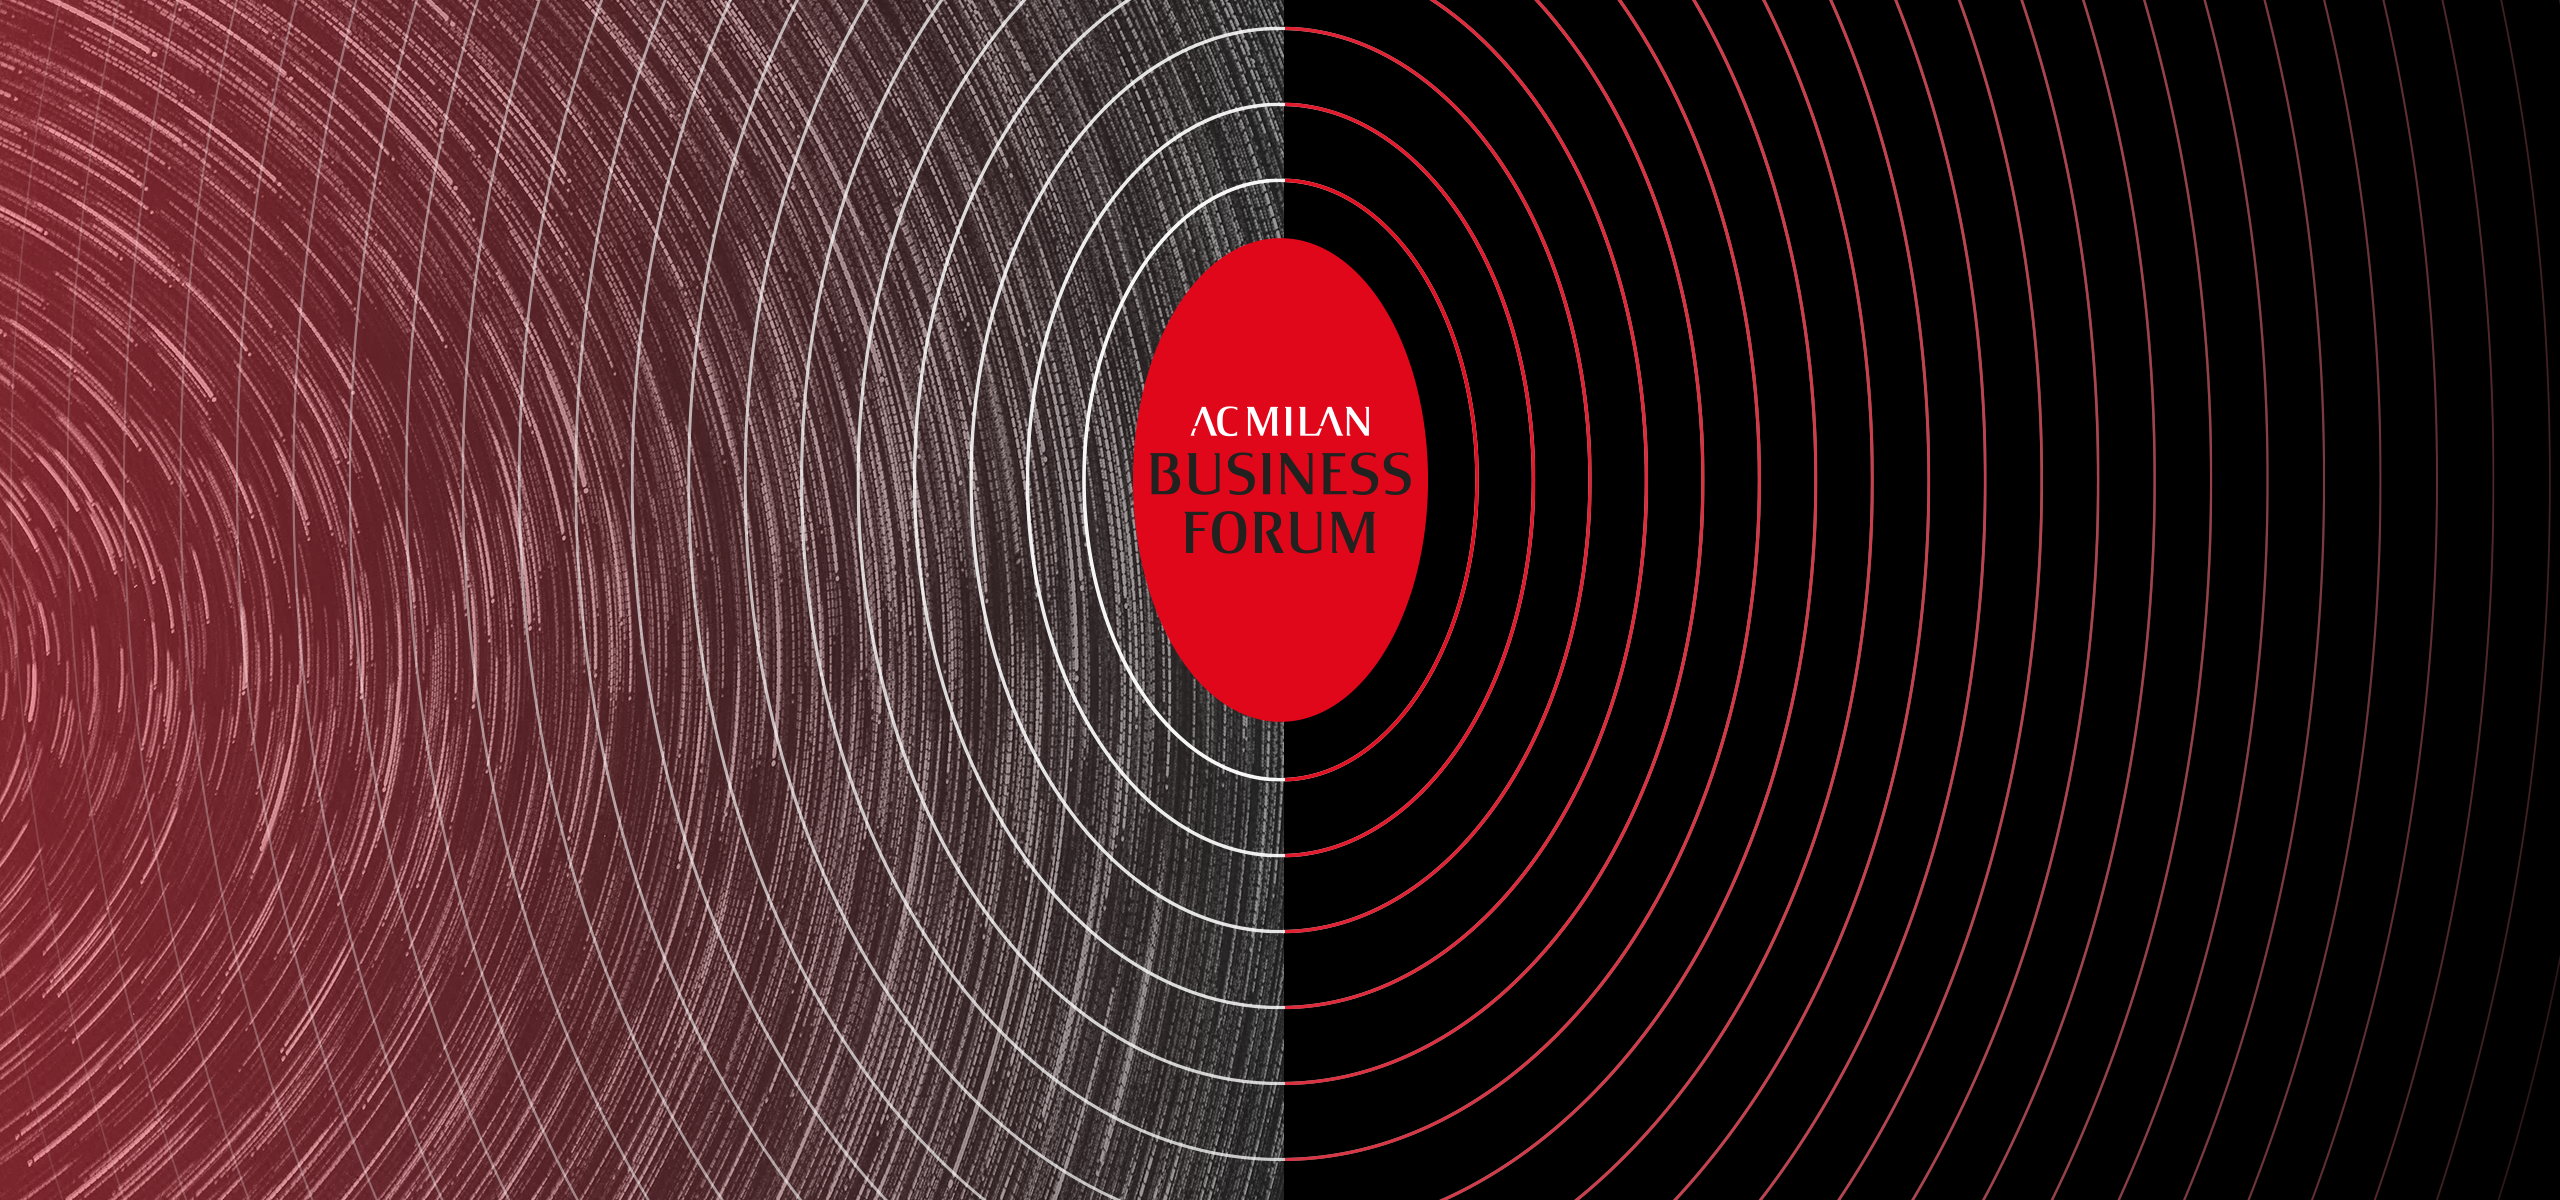 AC Milan Business Forum: from the | AC Milan